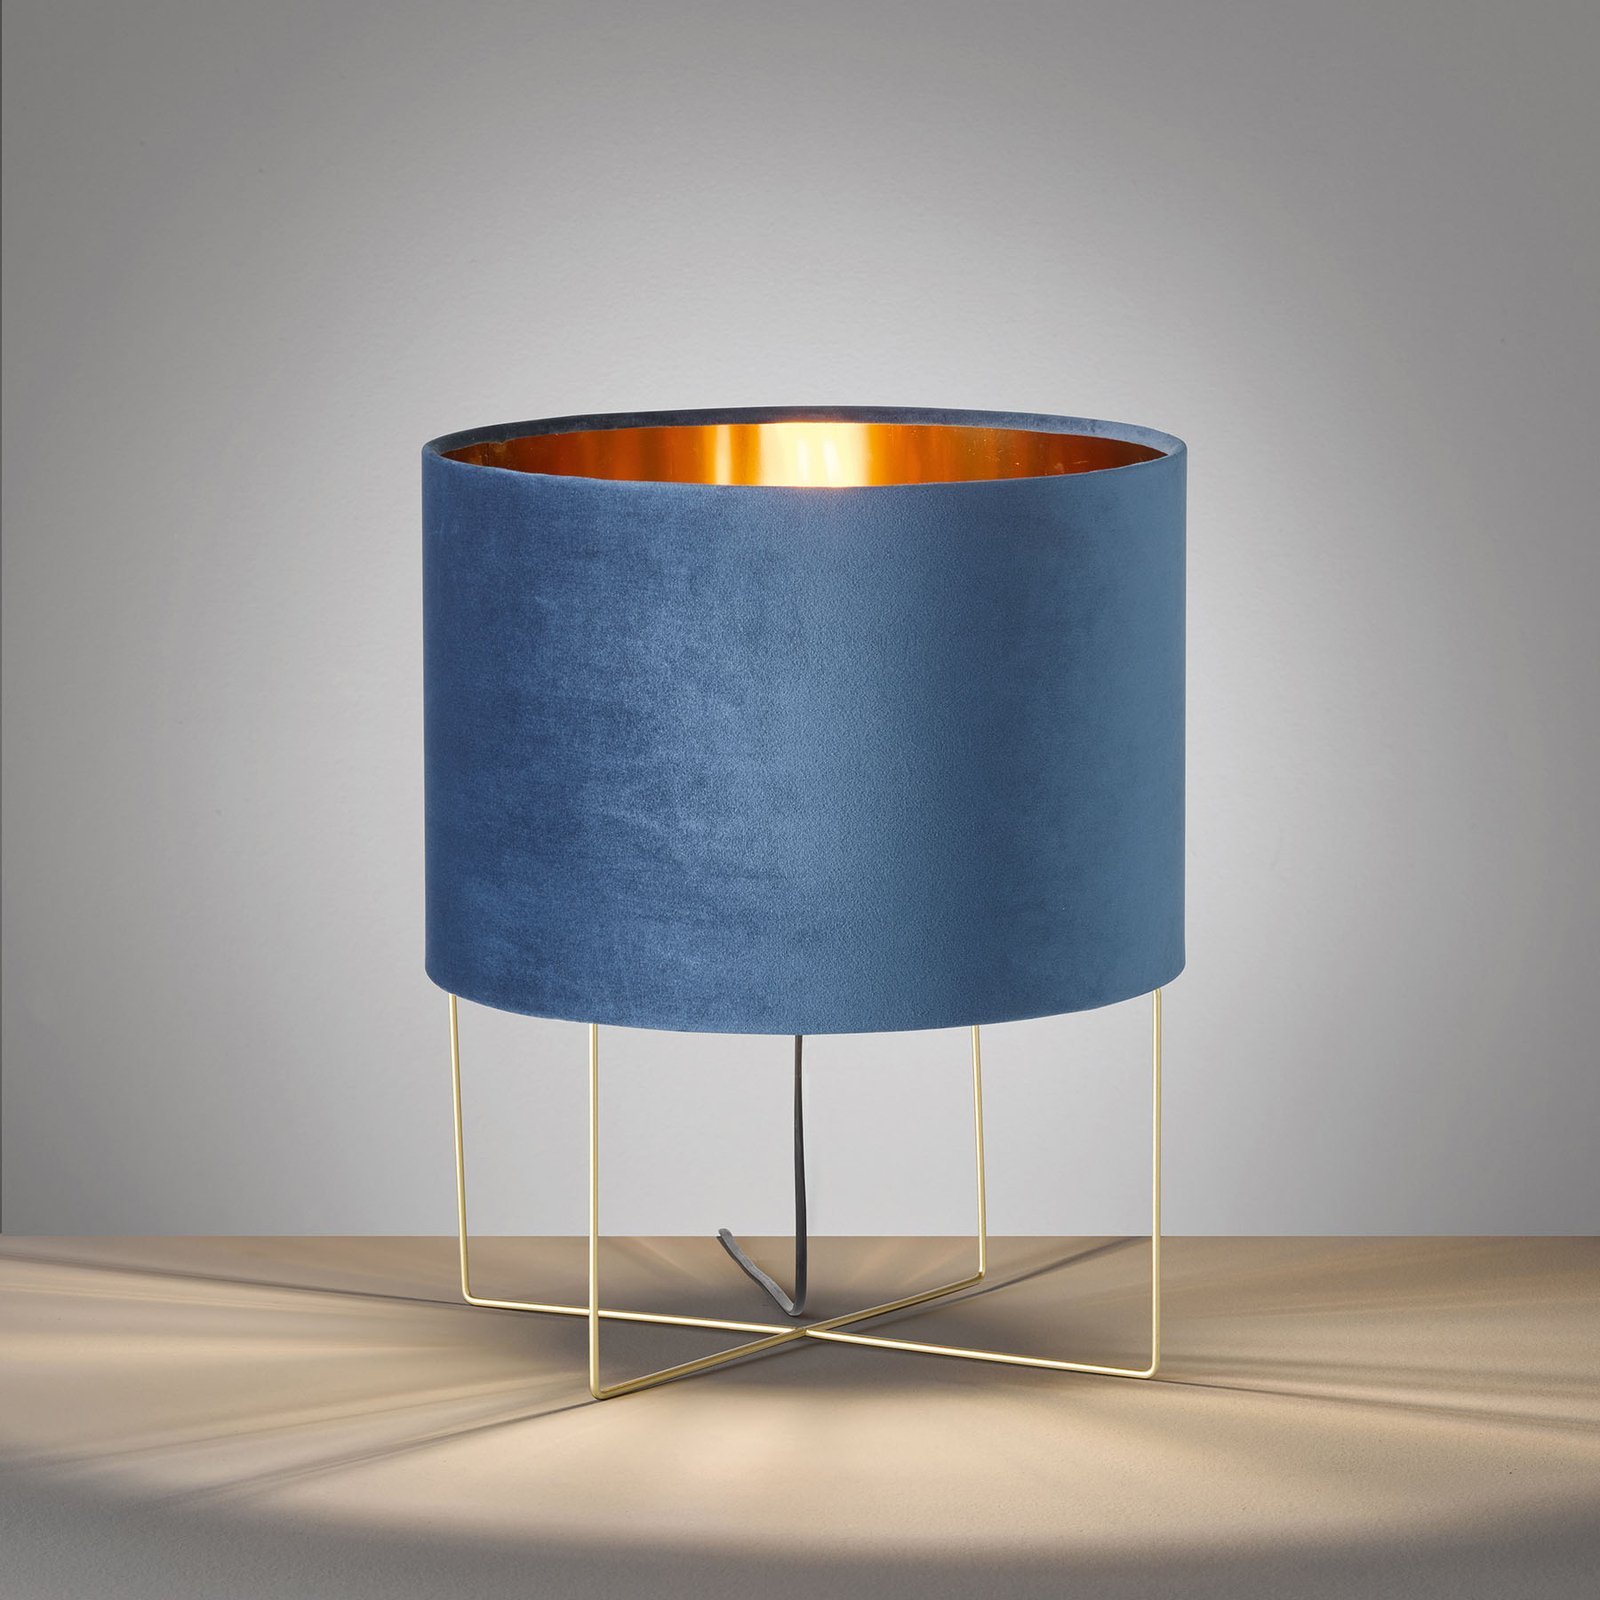 Bordslampa Aura, sammetsskärm, höjd 43 cm, blå